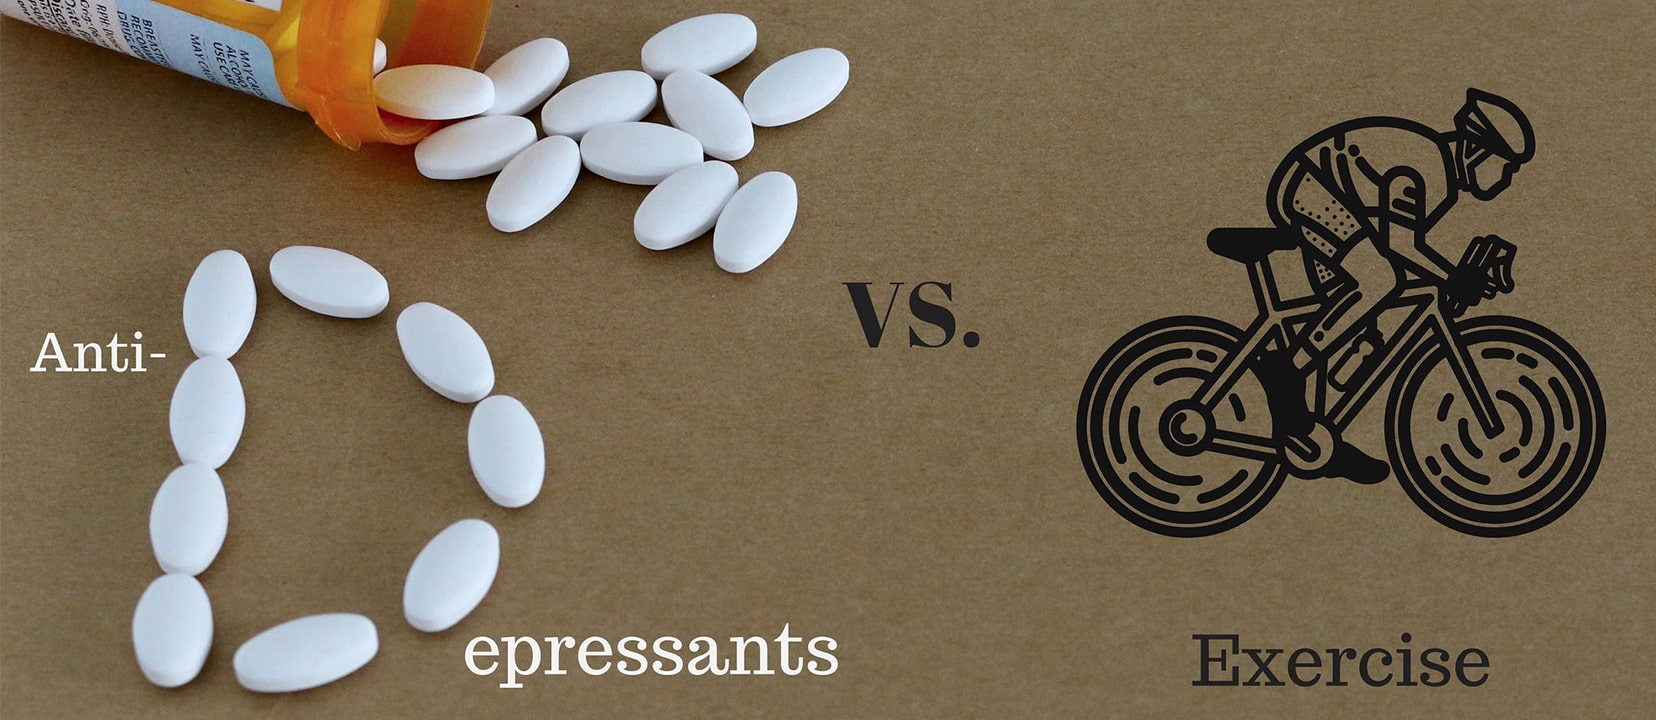 Are Sugar Pills Better than Antidepressant Drugs?